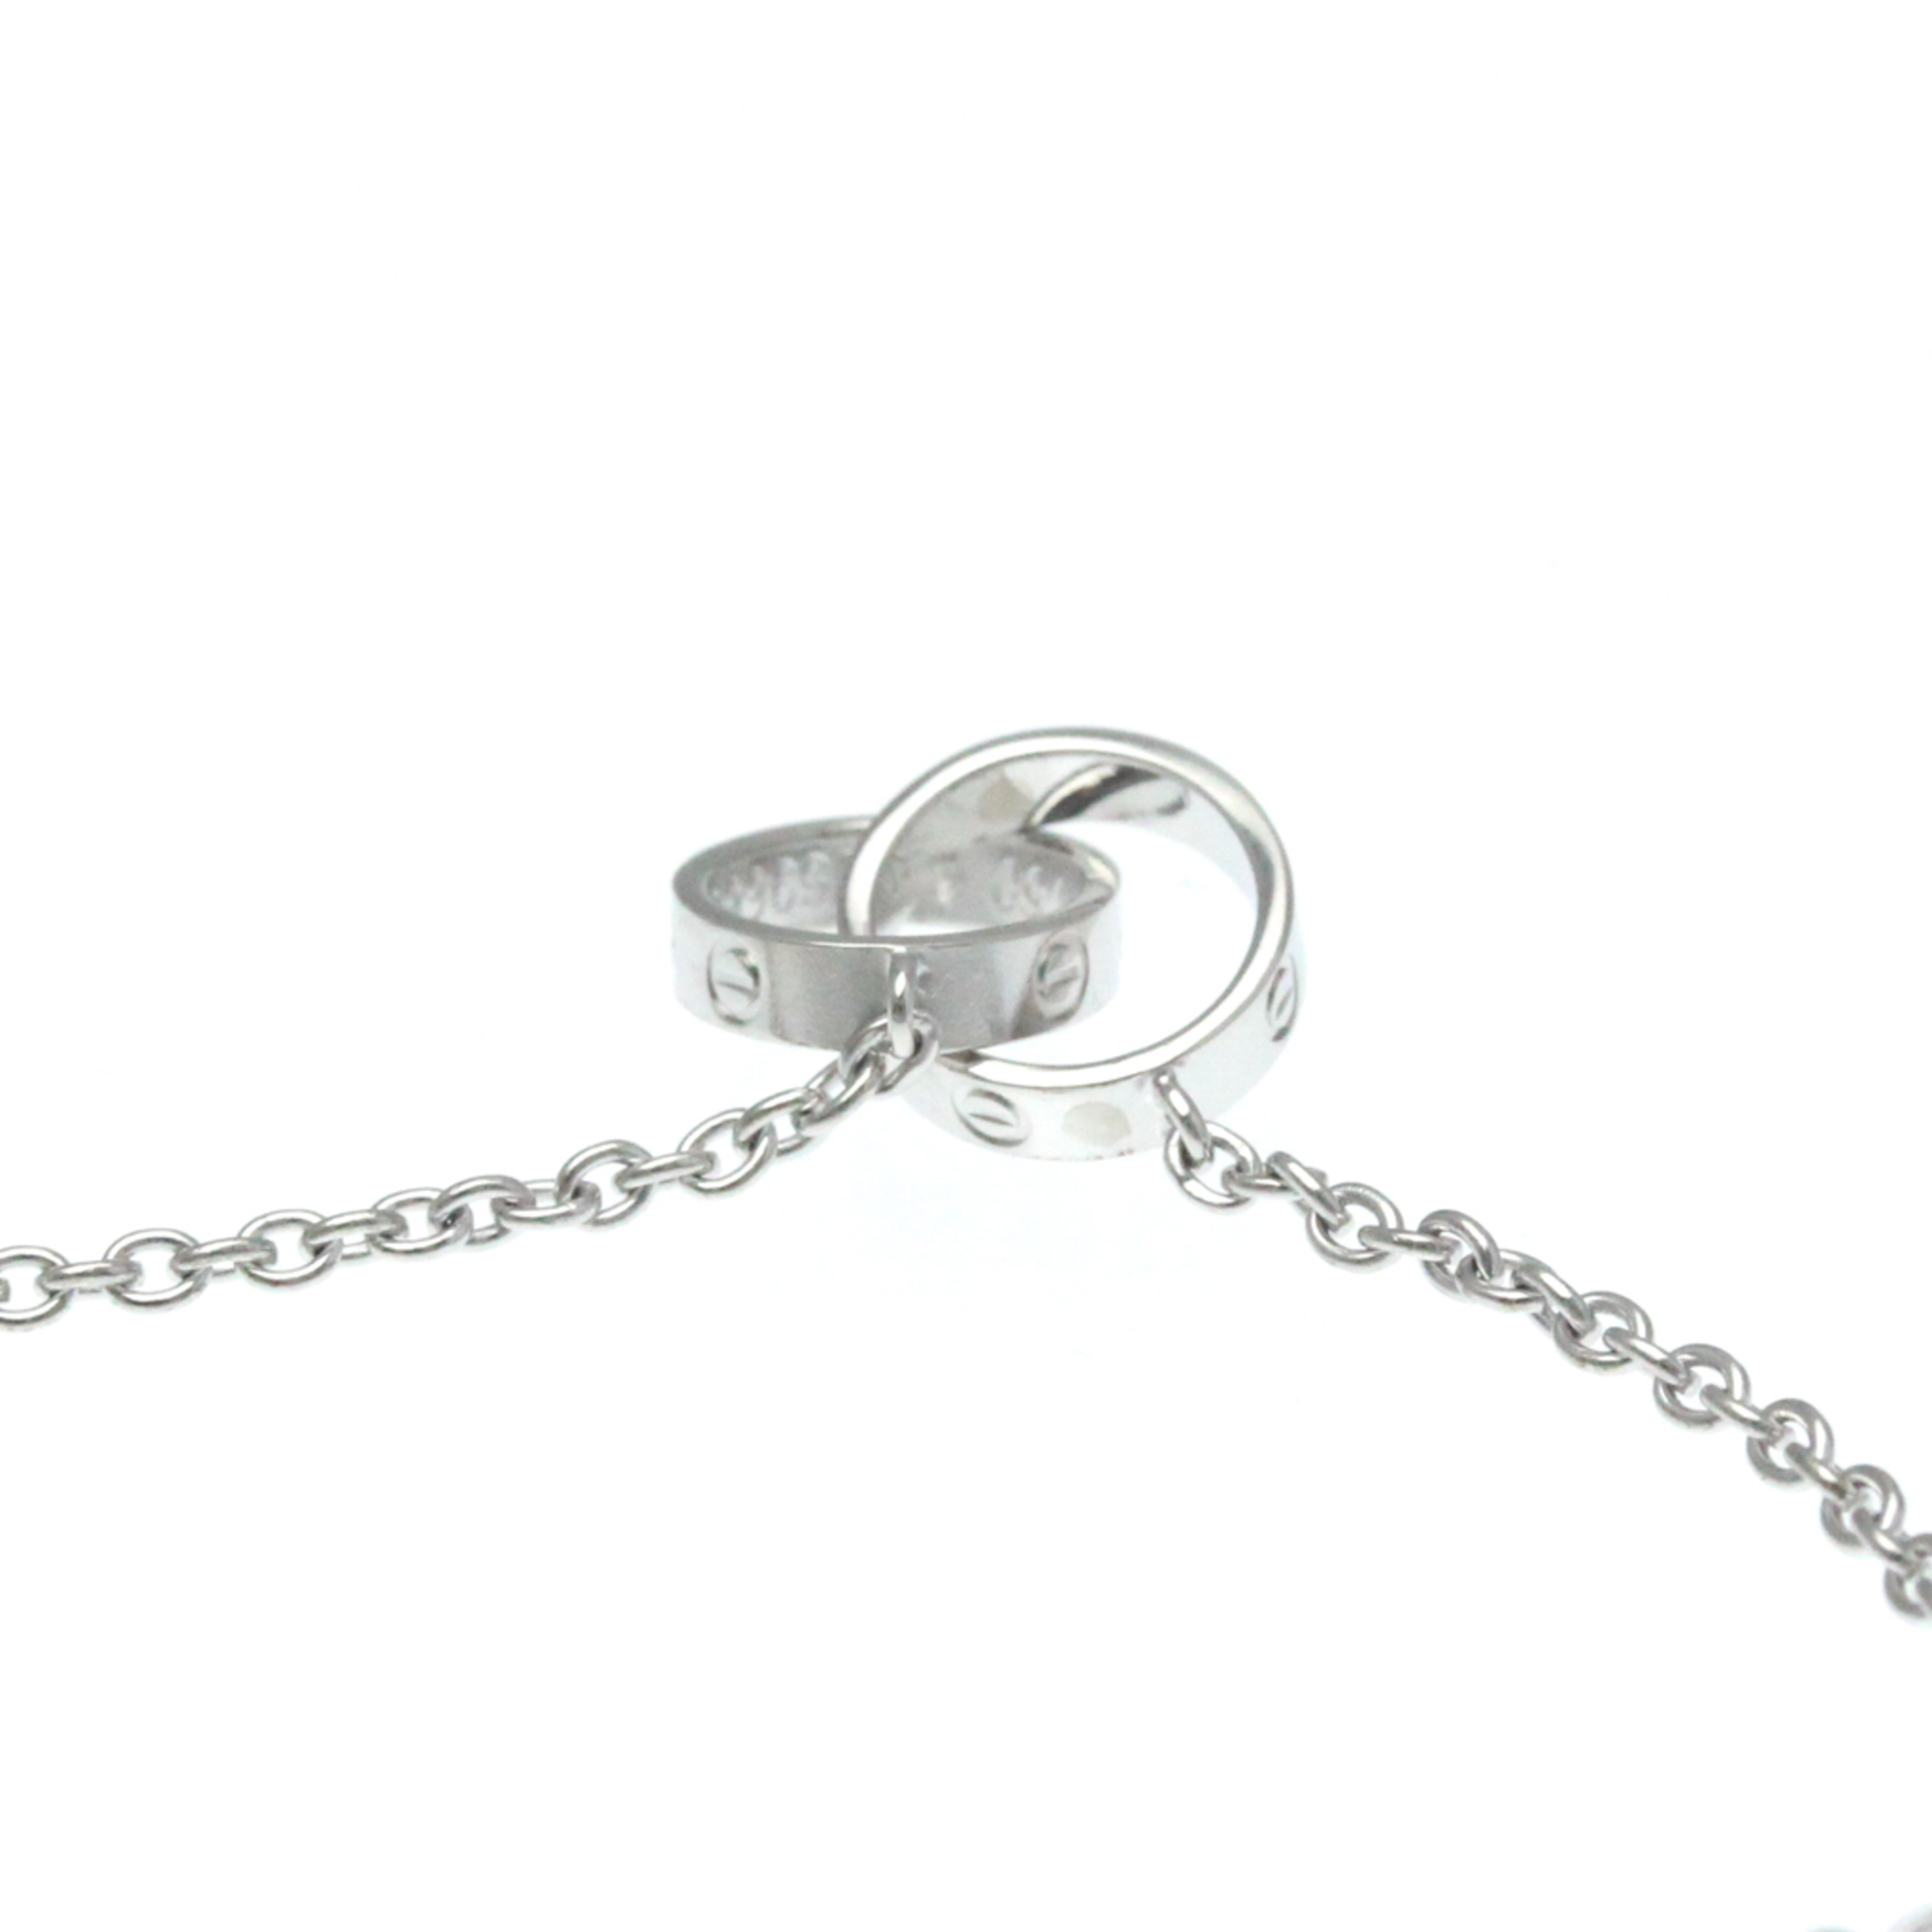 Cartier Love B7212500 White Gold (18K) Women's Necklace